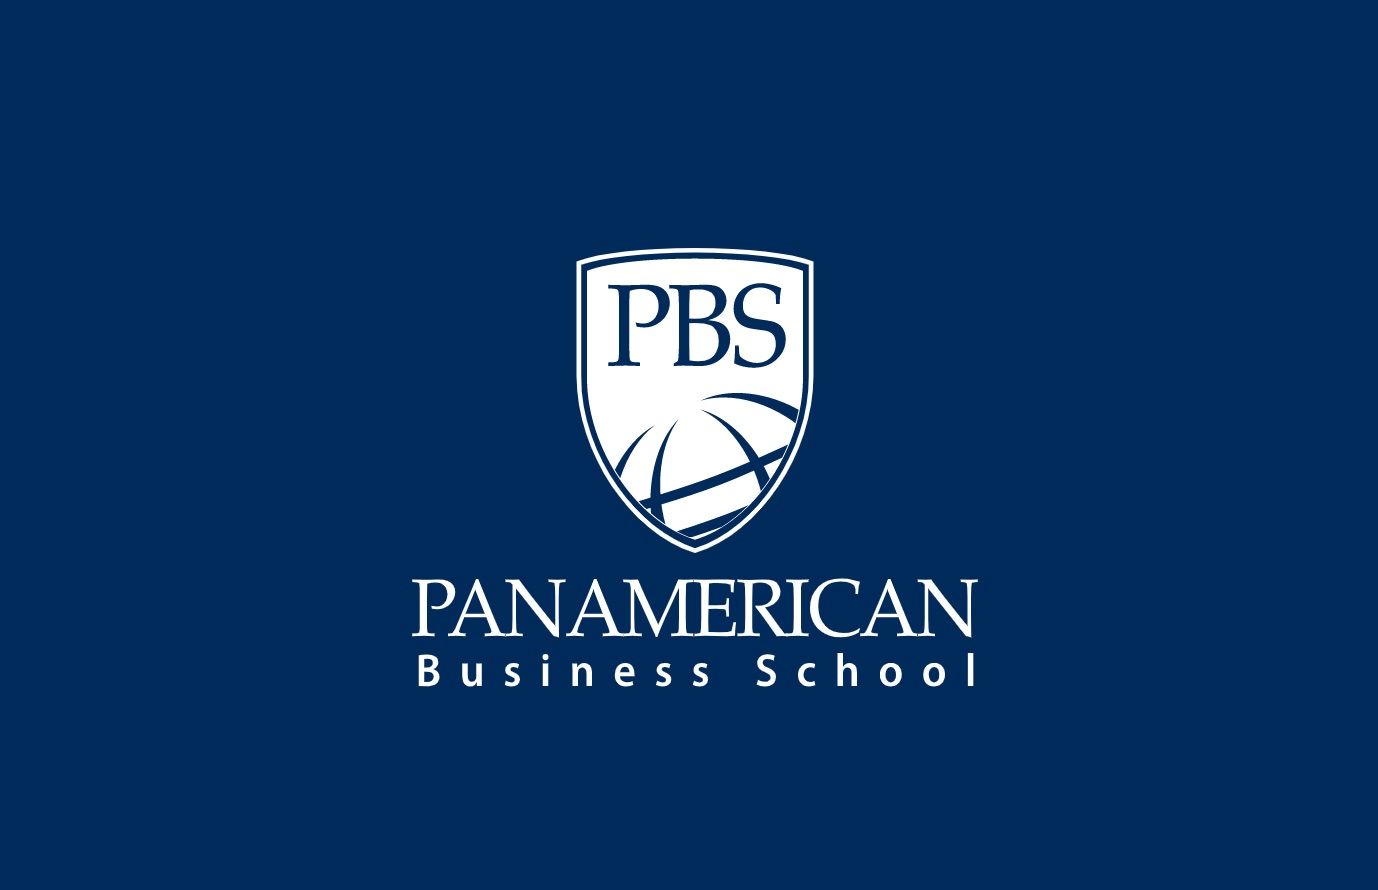 PBS Panamerican Business School